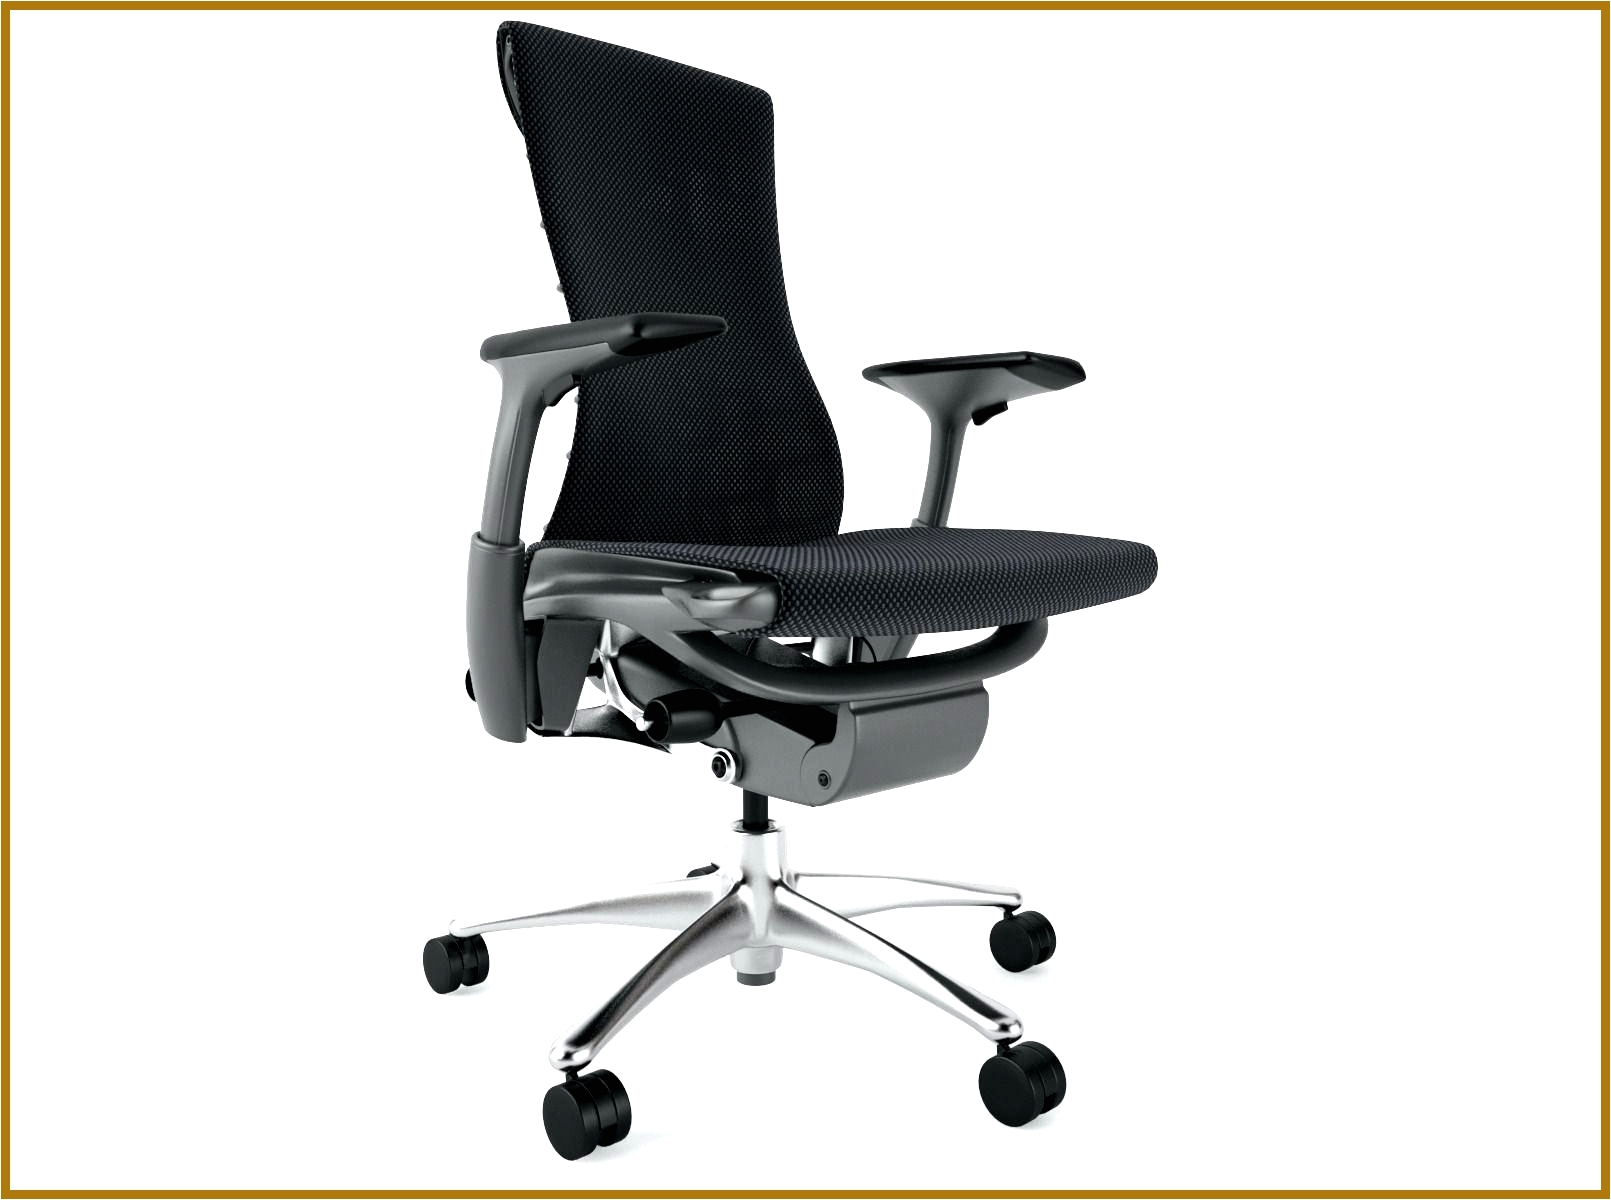 Aeron Chair Sizes How to Tell Chair Beautiful Herman Miller Aeron Chair Ebay Inspirational Desk